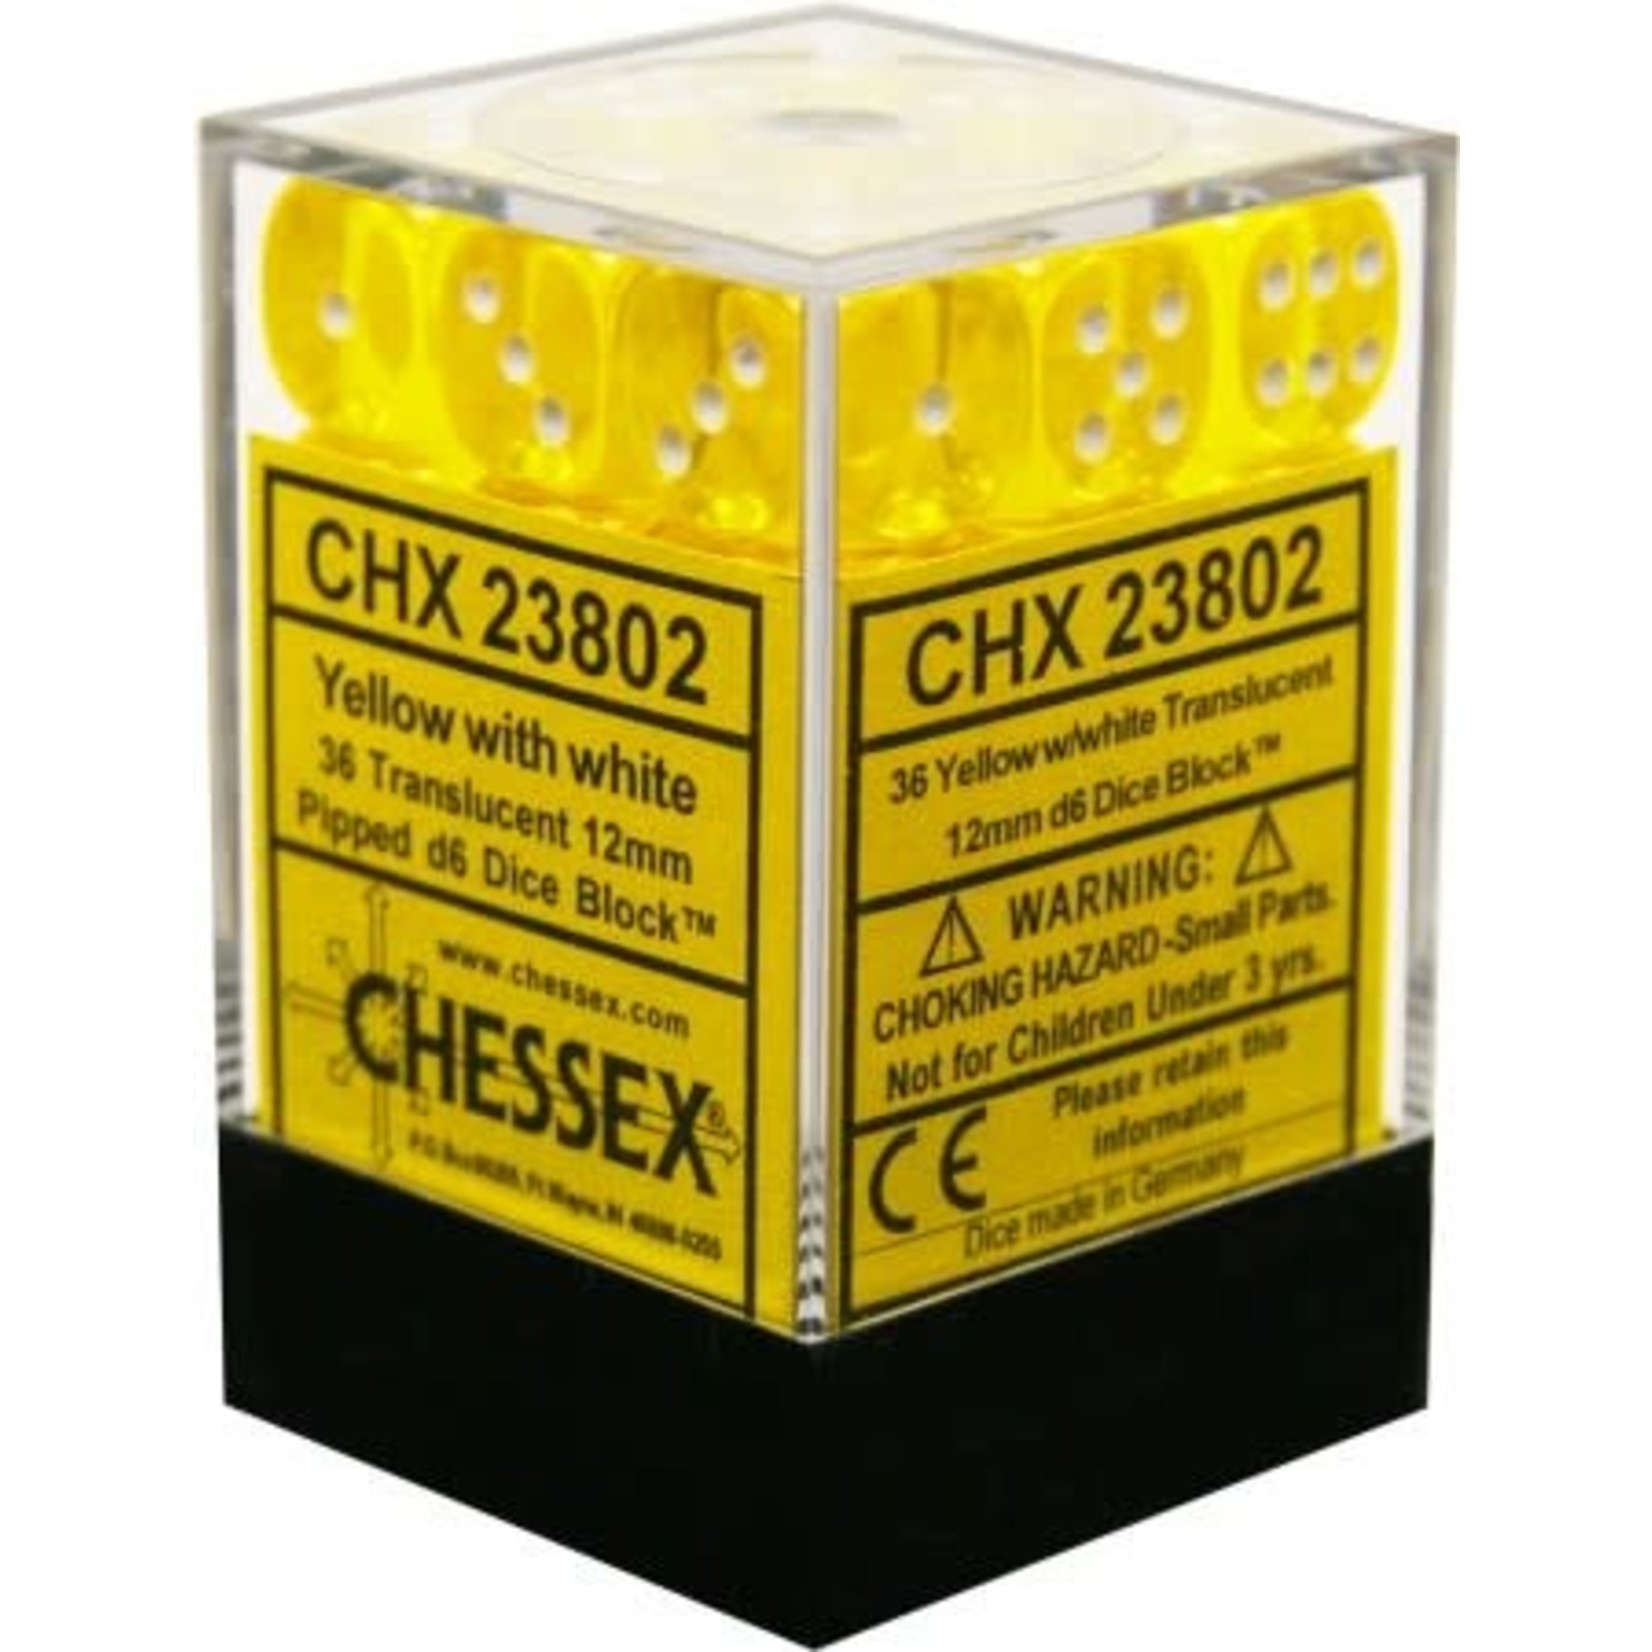 chessex Chessex Dice Translucent 36D6 Yellow/White